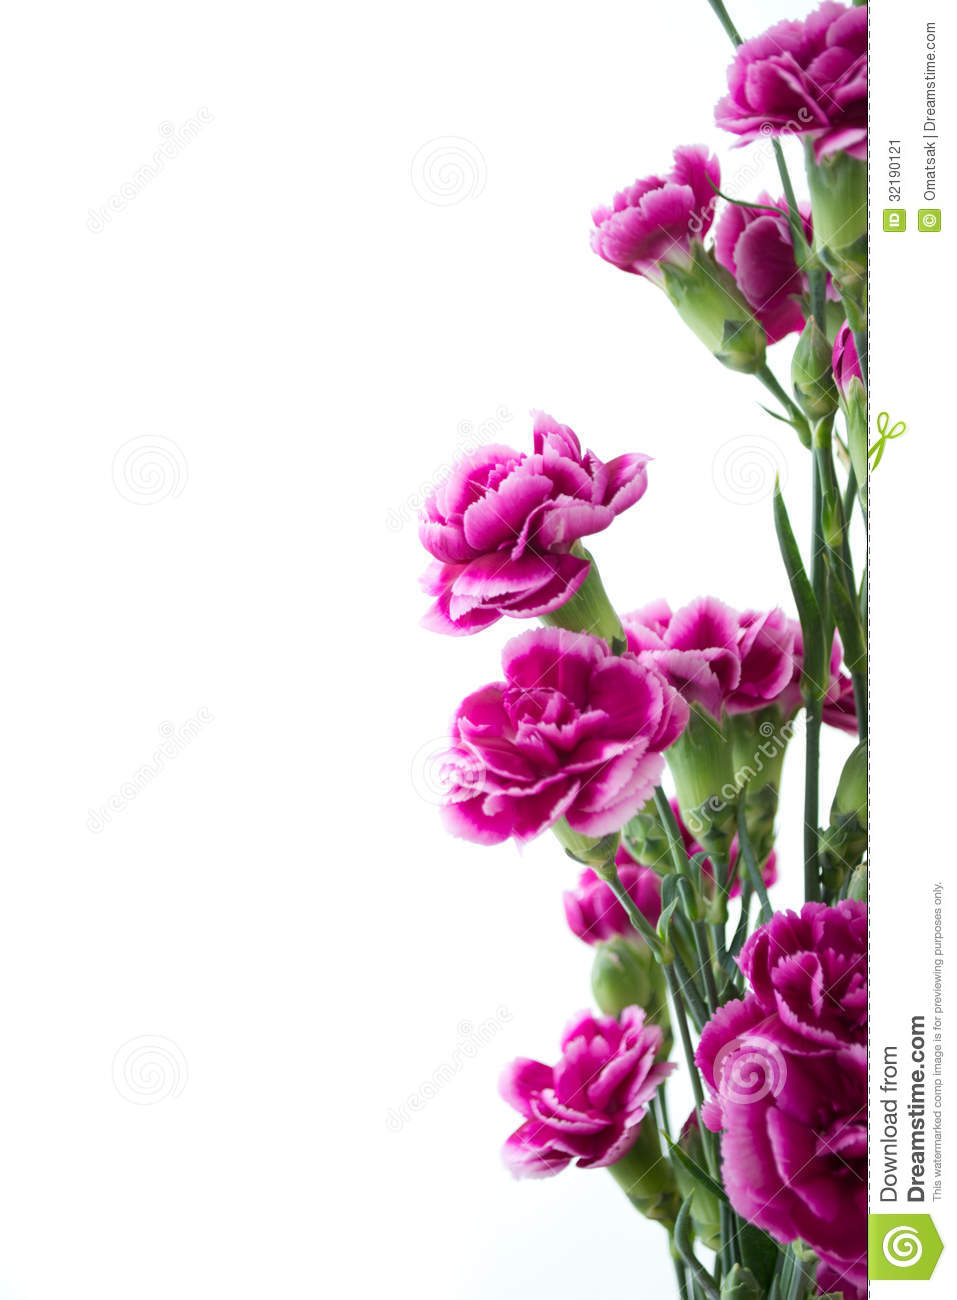 Purple Carnation Flowers Over White Background Stock Image   Image    